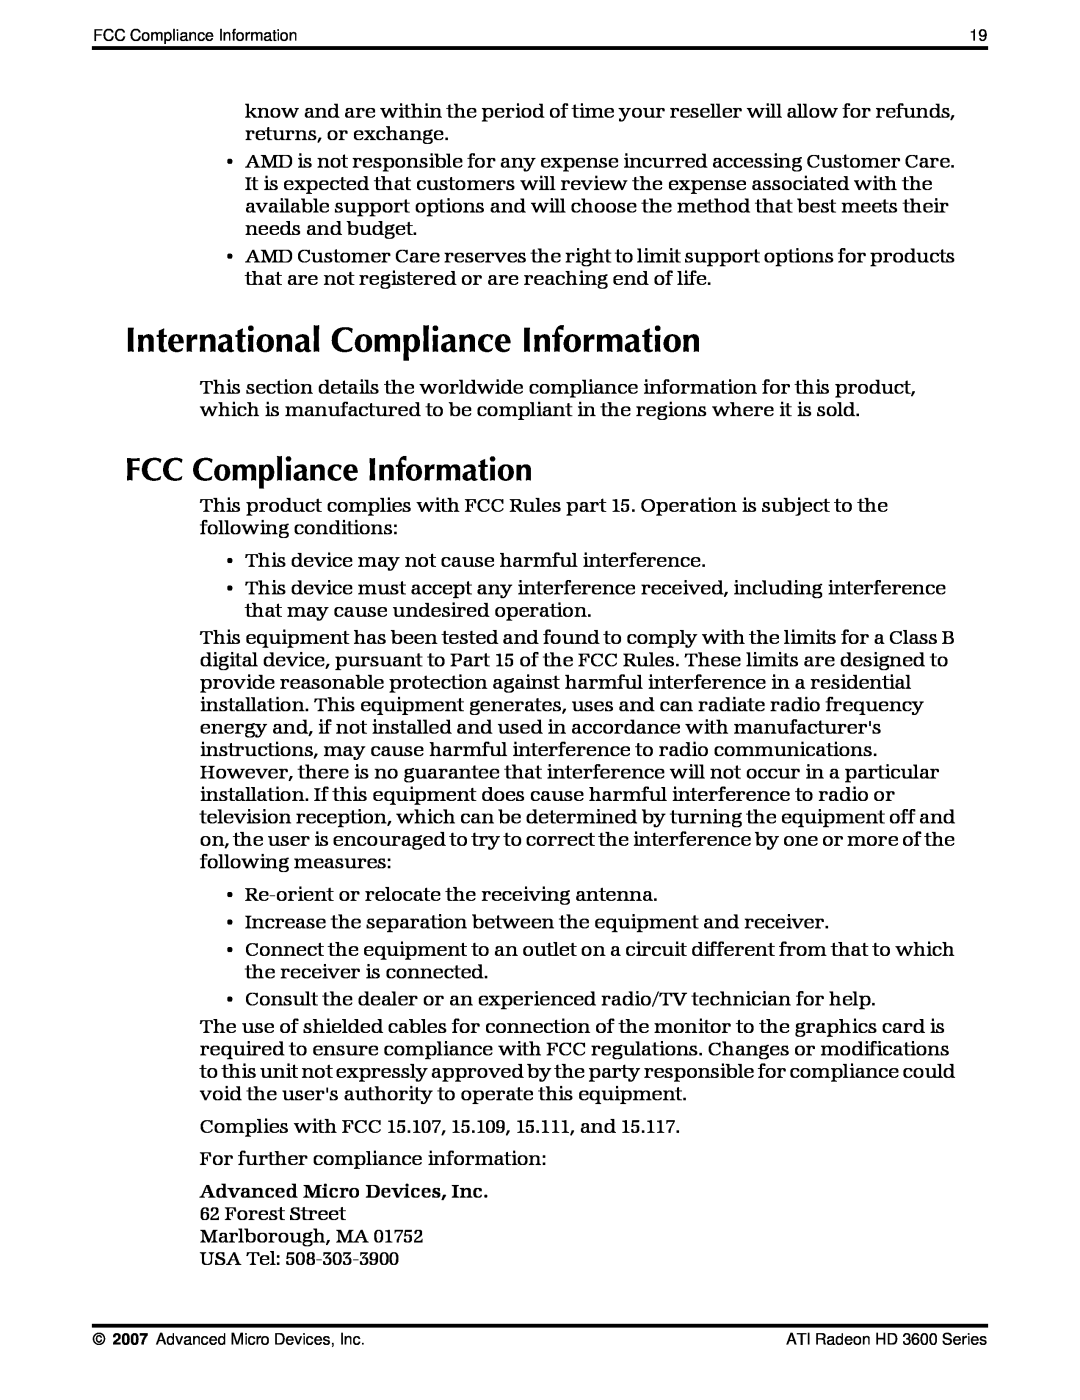 AMD 3600 manual International Compliance Information, FCC Compliance Information, Advanced Micro Devices, Inc 